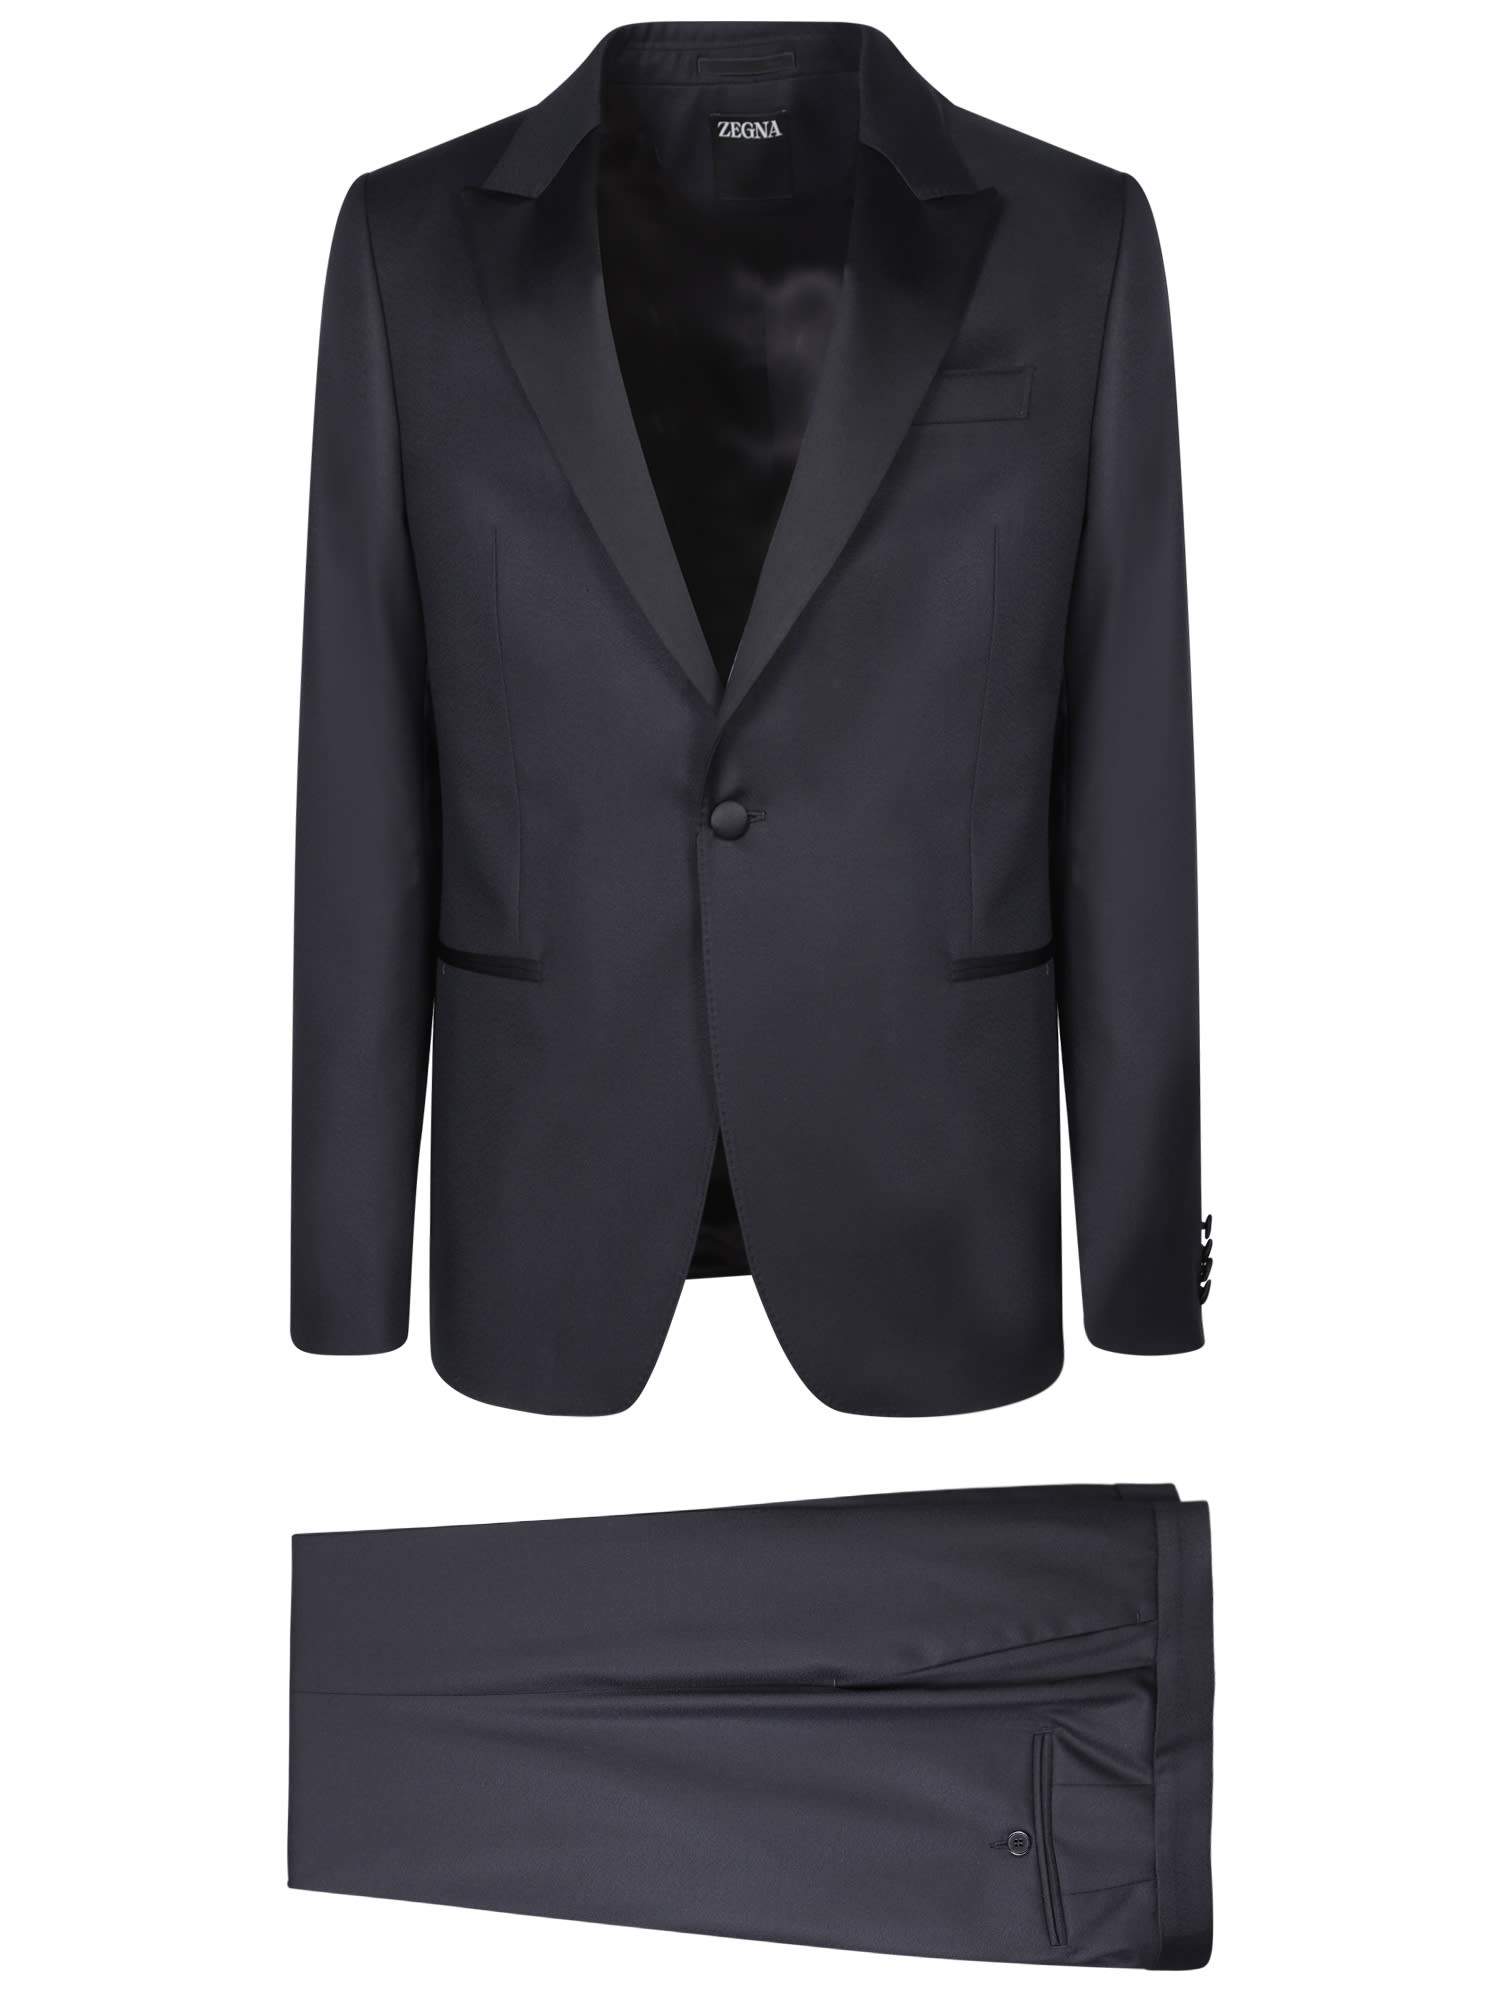 Zegna Black Wool Tuxedo Suit